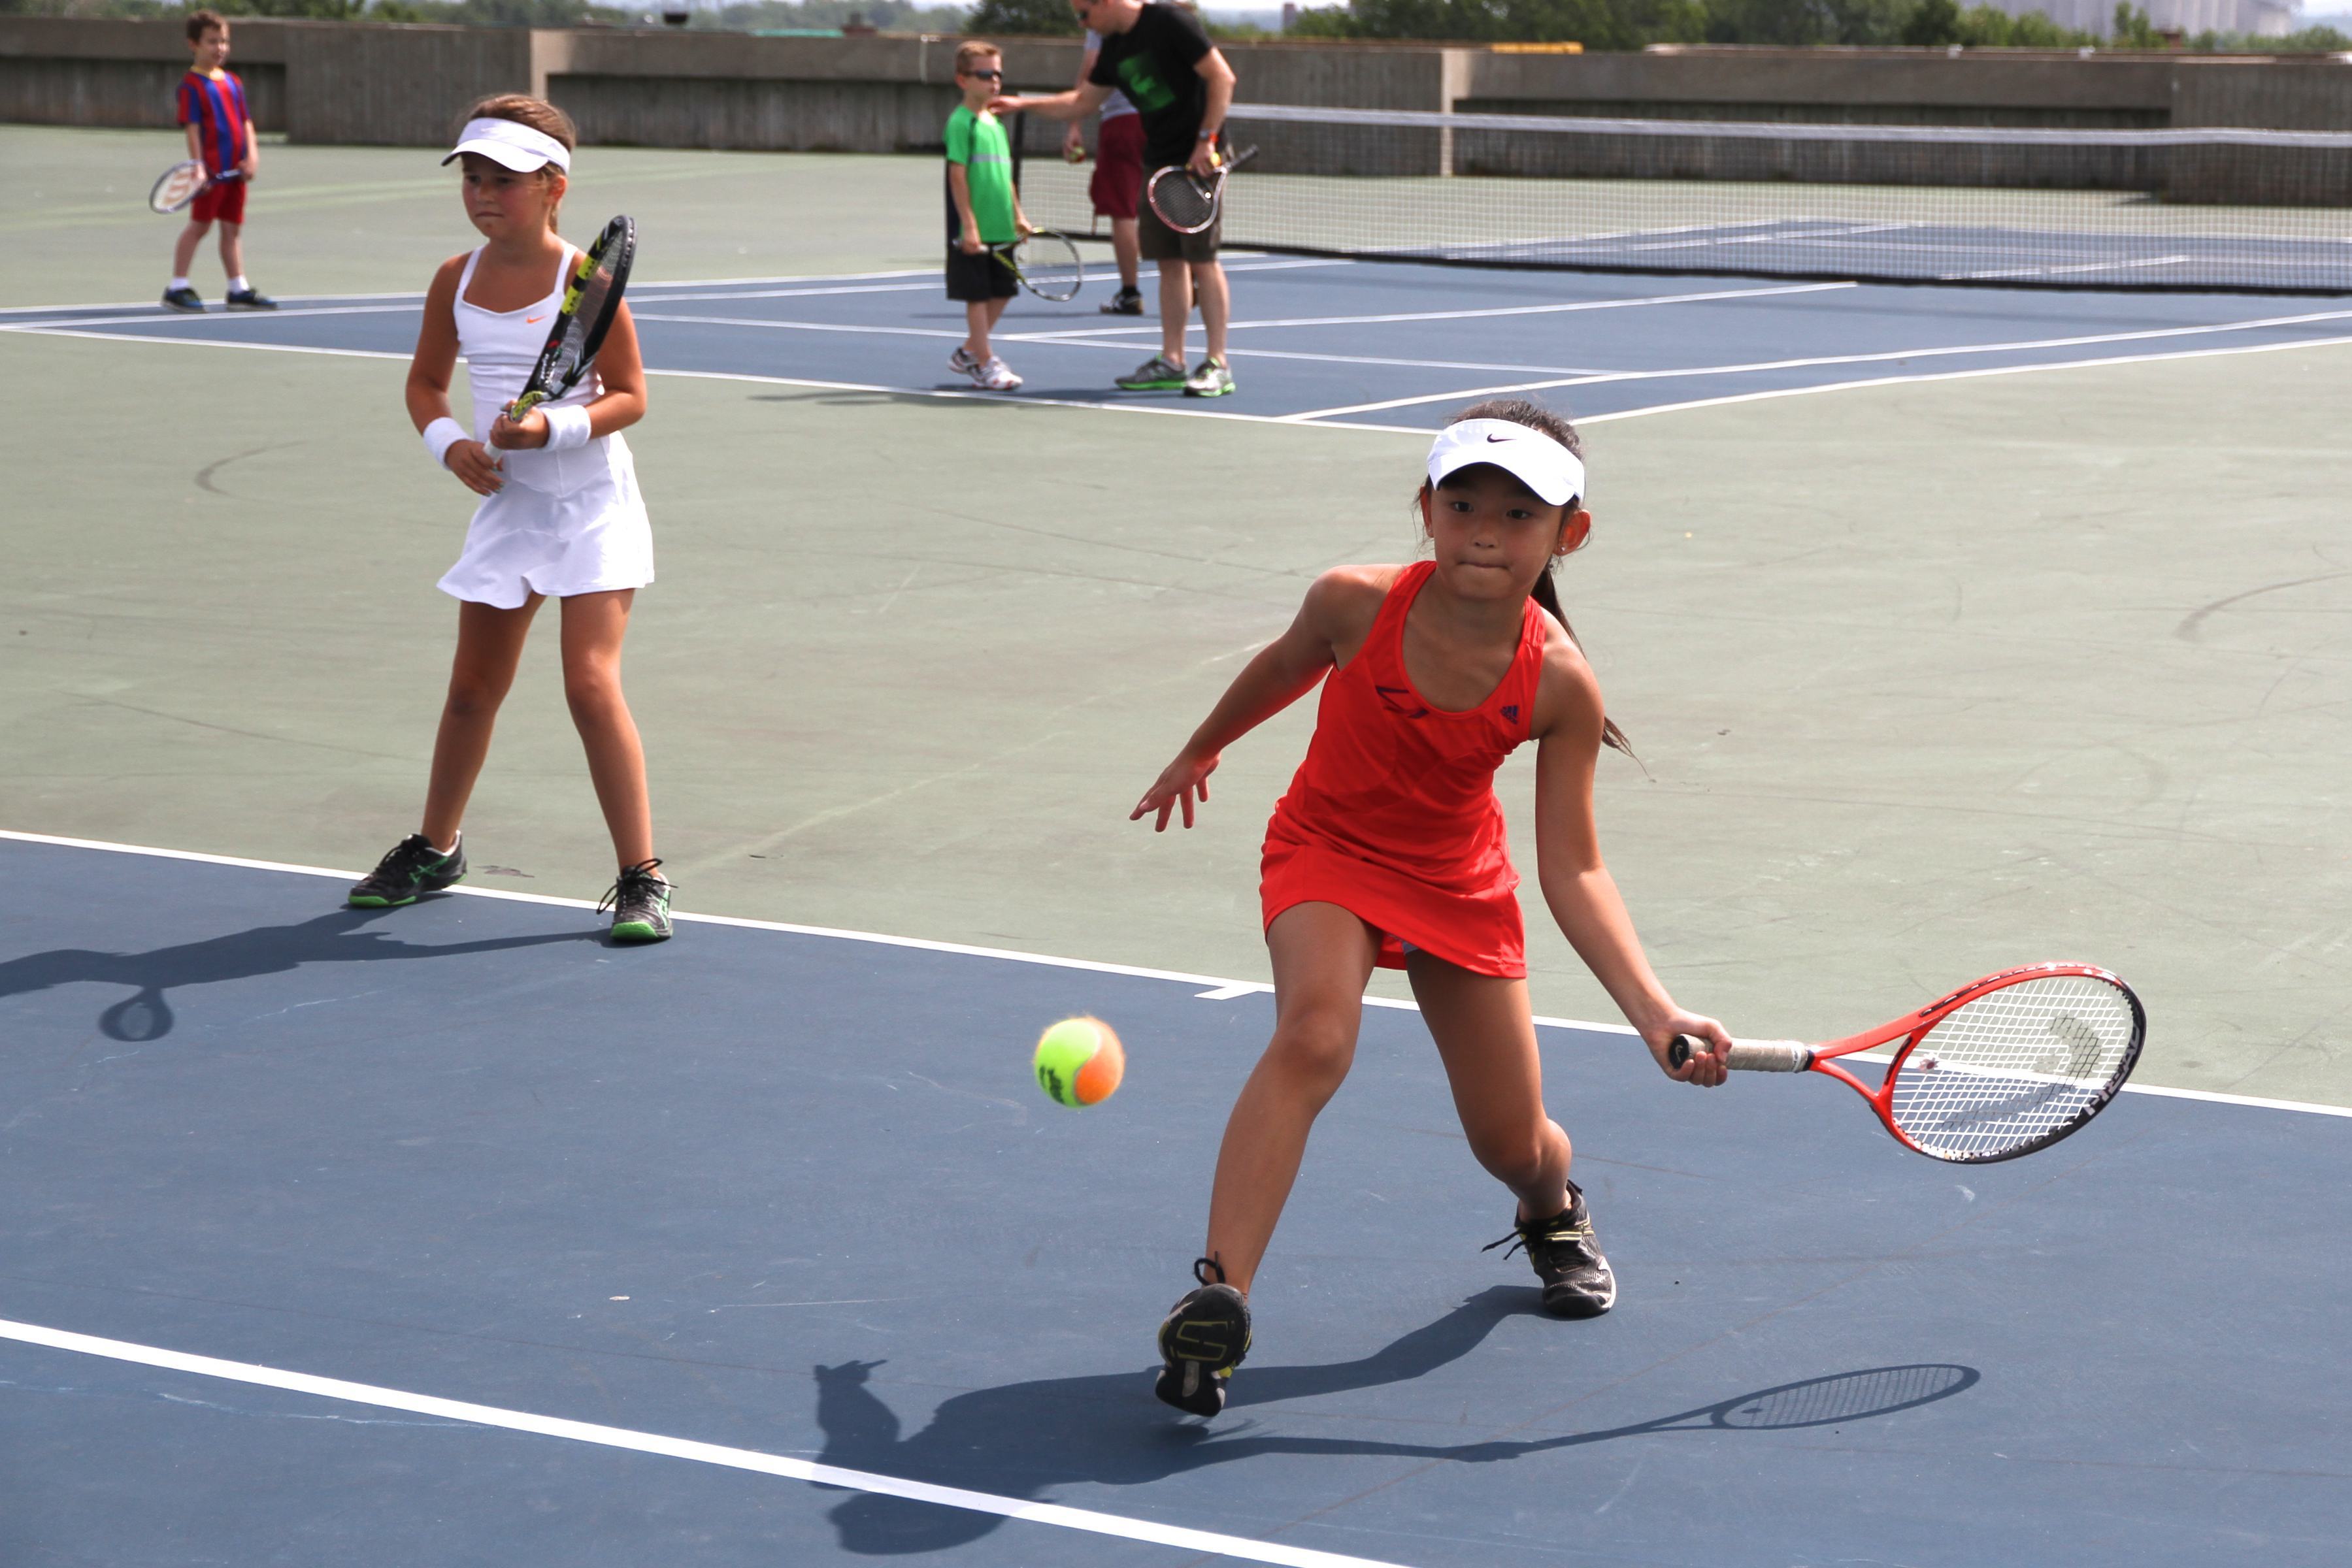 More Details on Kids Tennis - Tennis Canada